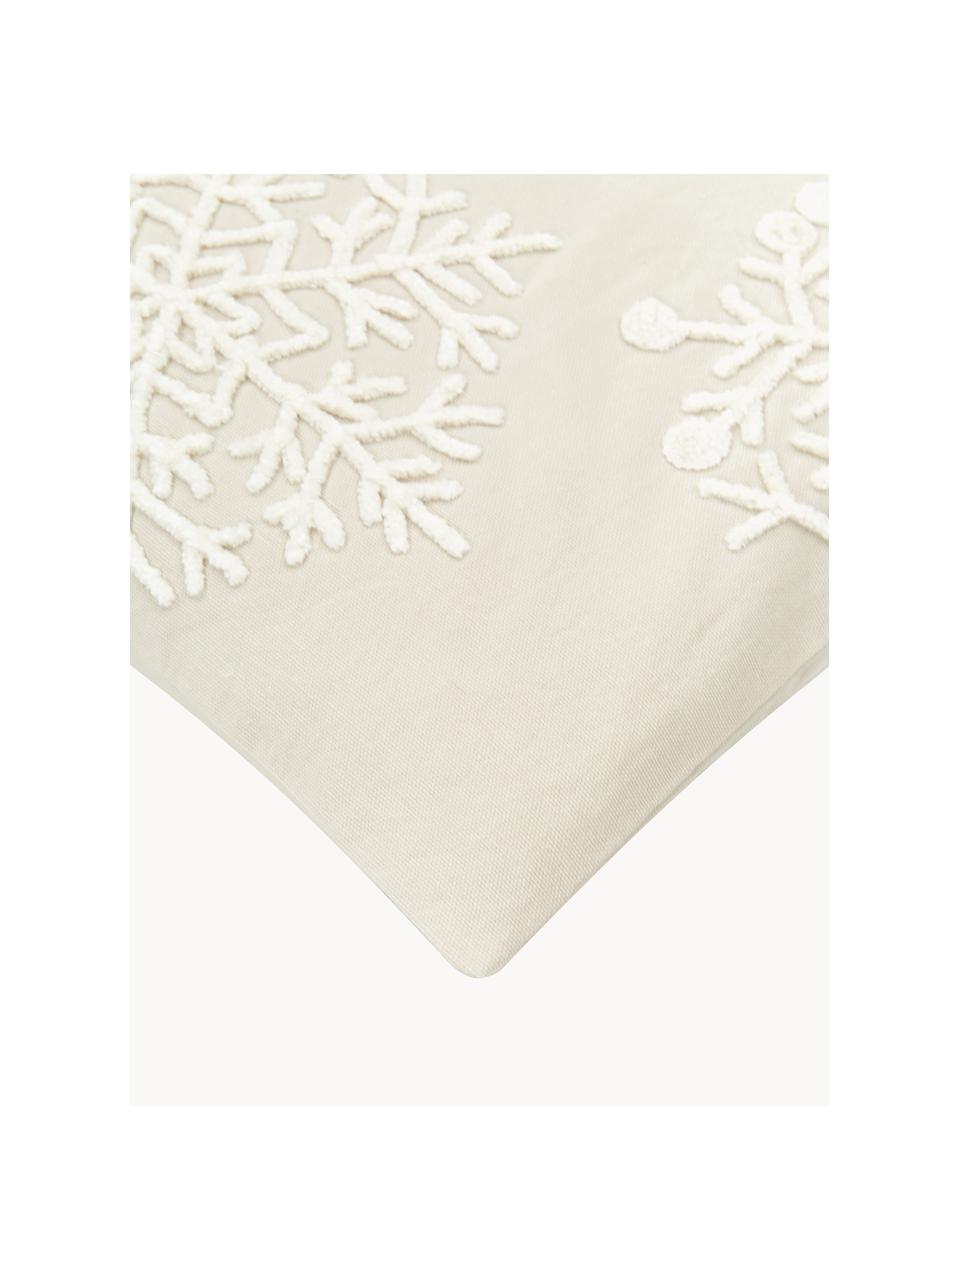 Bestickte Kissenhülle Snowflake, 100 % Baumwolle, Beige, Cremeweiss, B 45 x L 45 cm